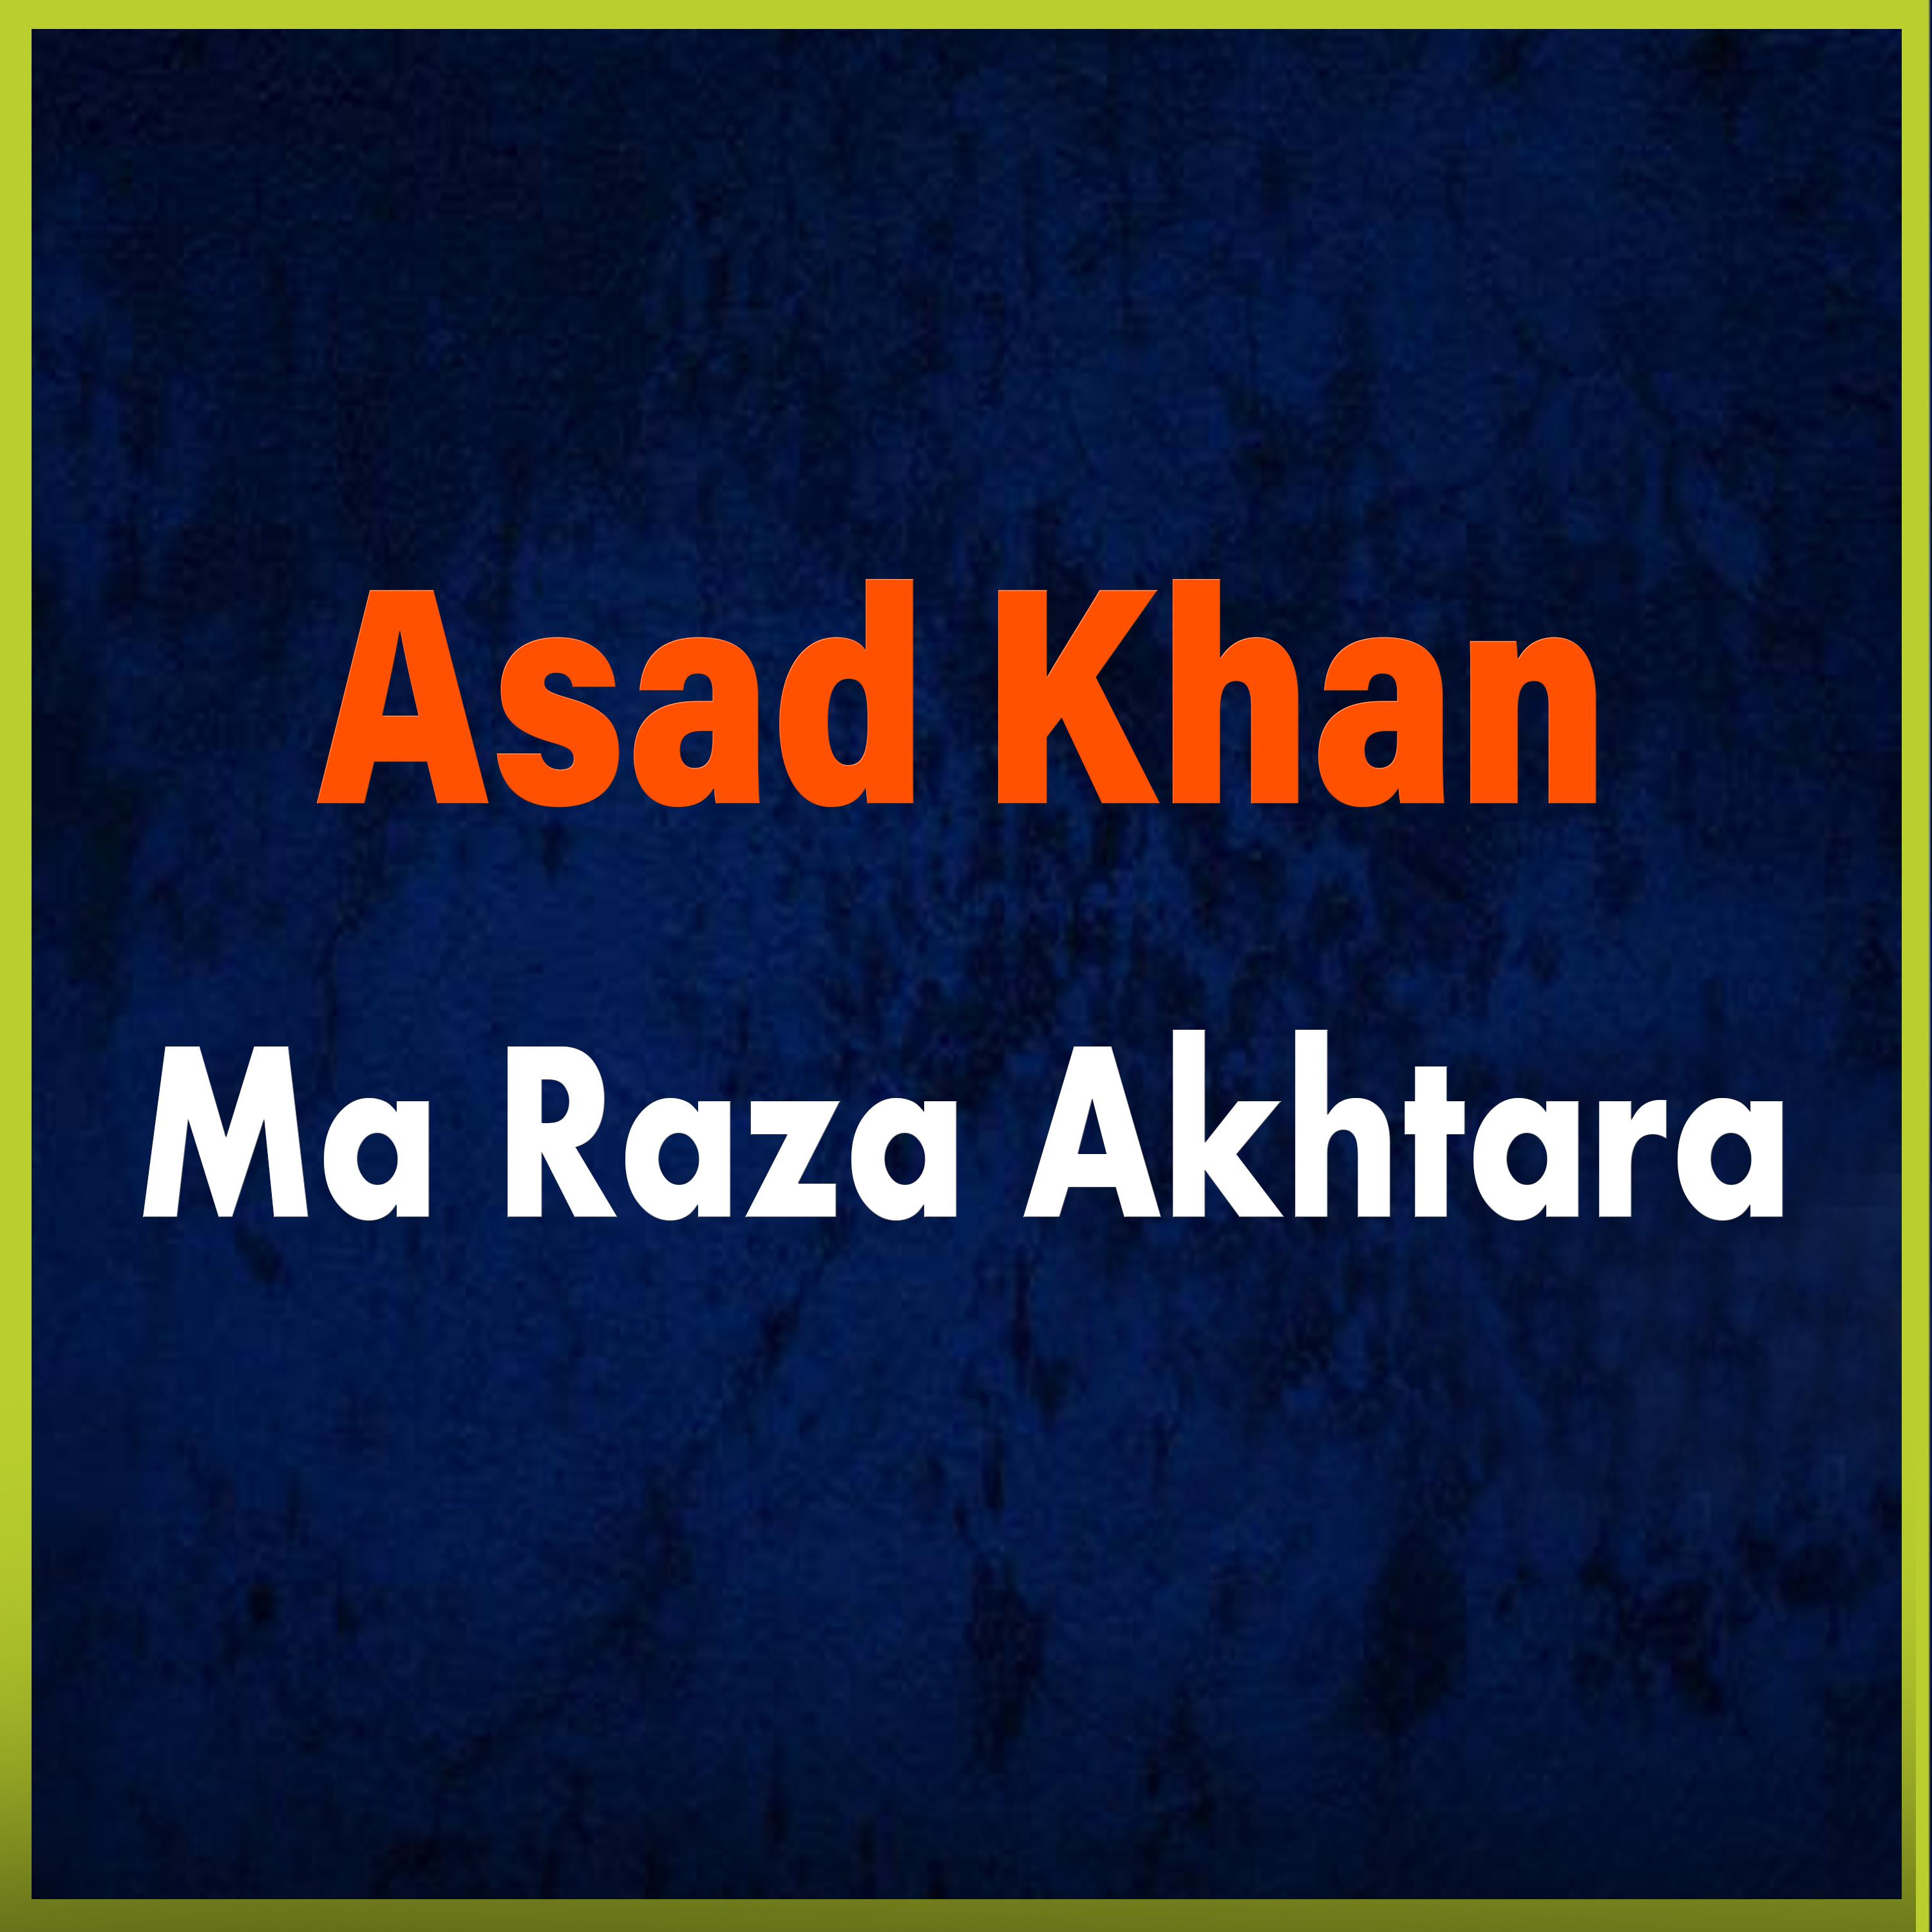 Asad Khan - Khare Starge Sra Laban